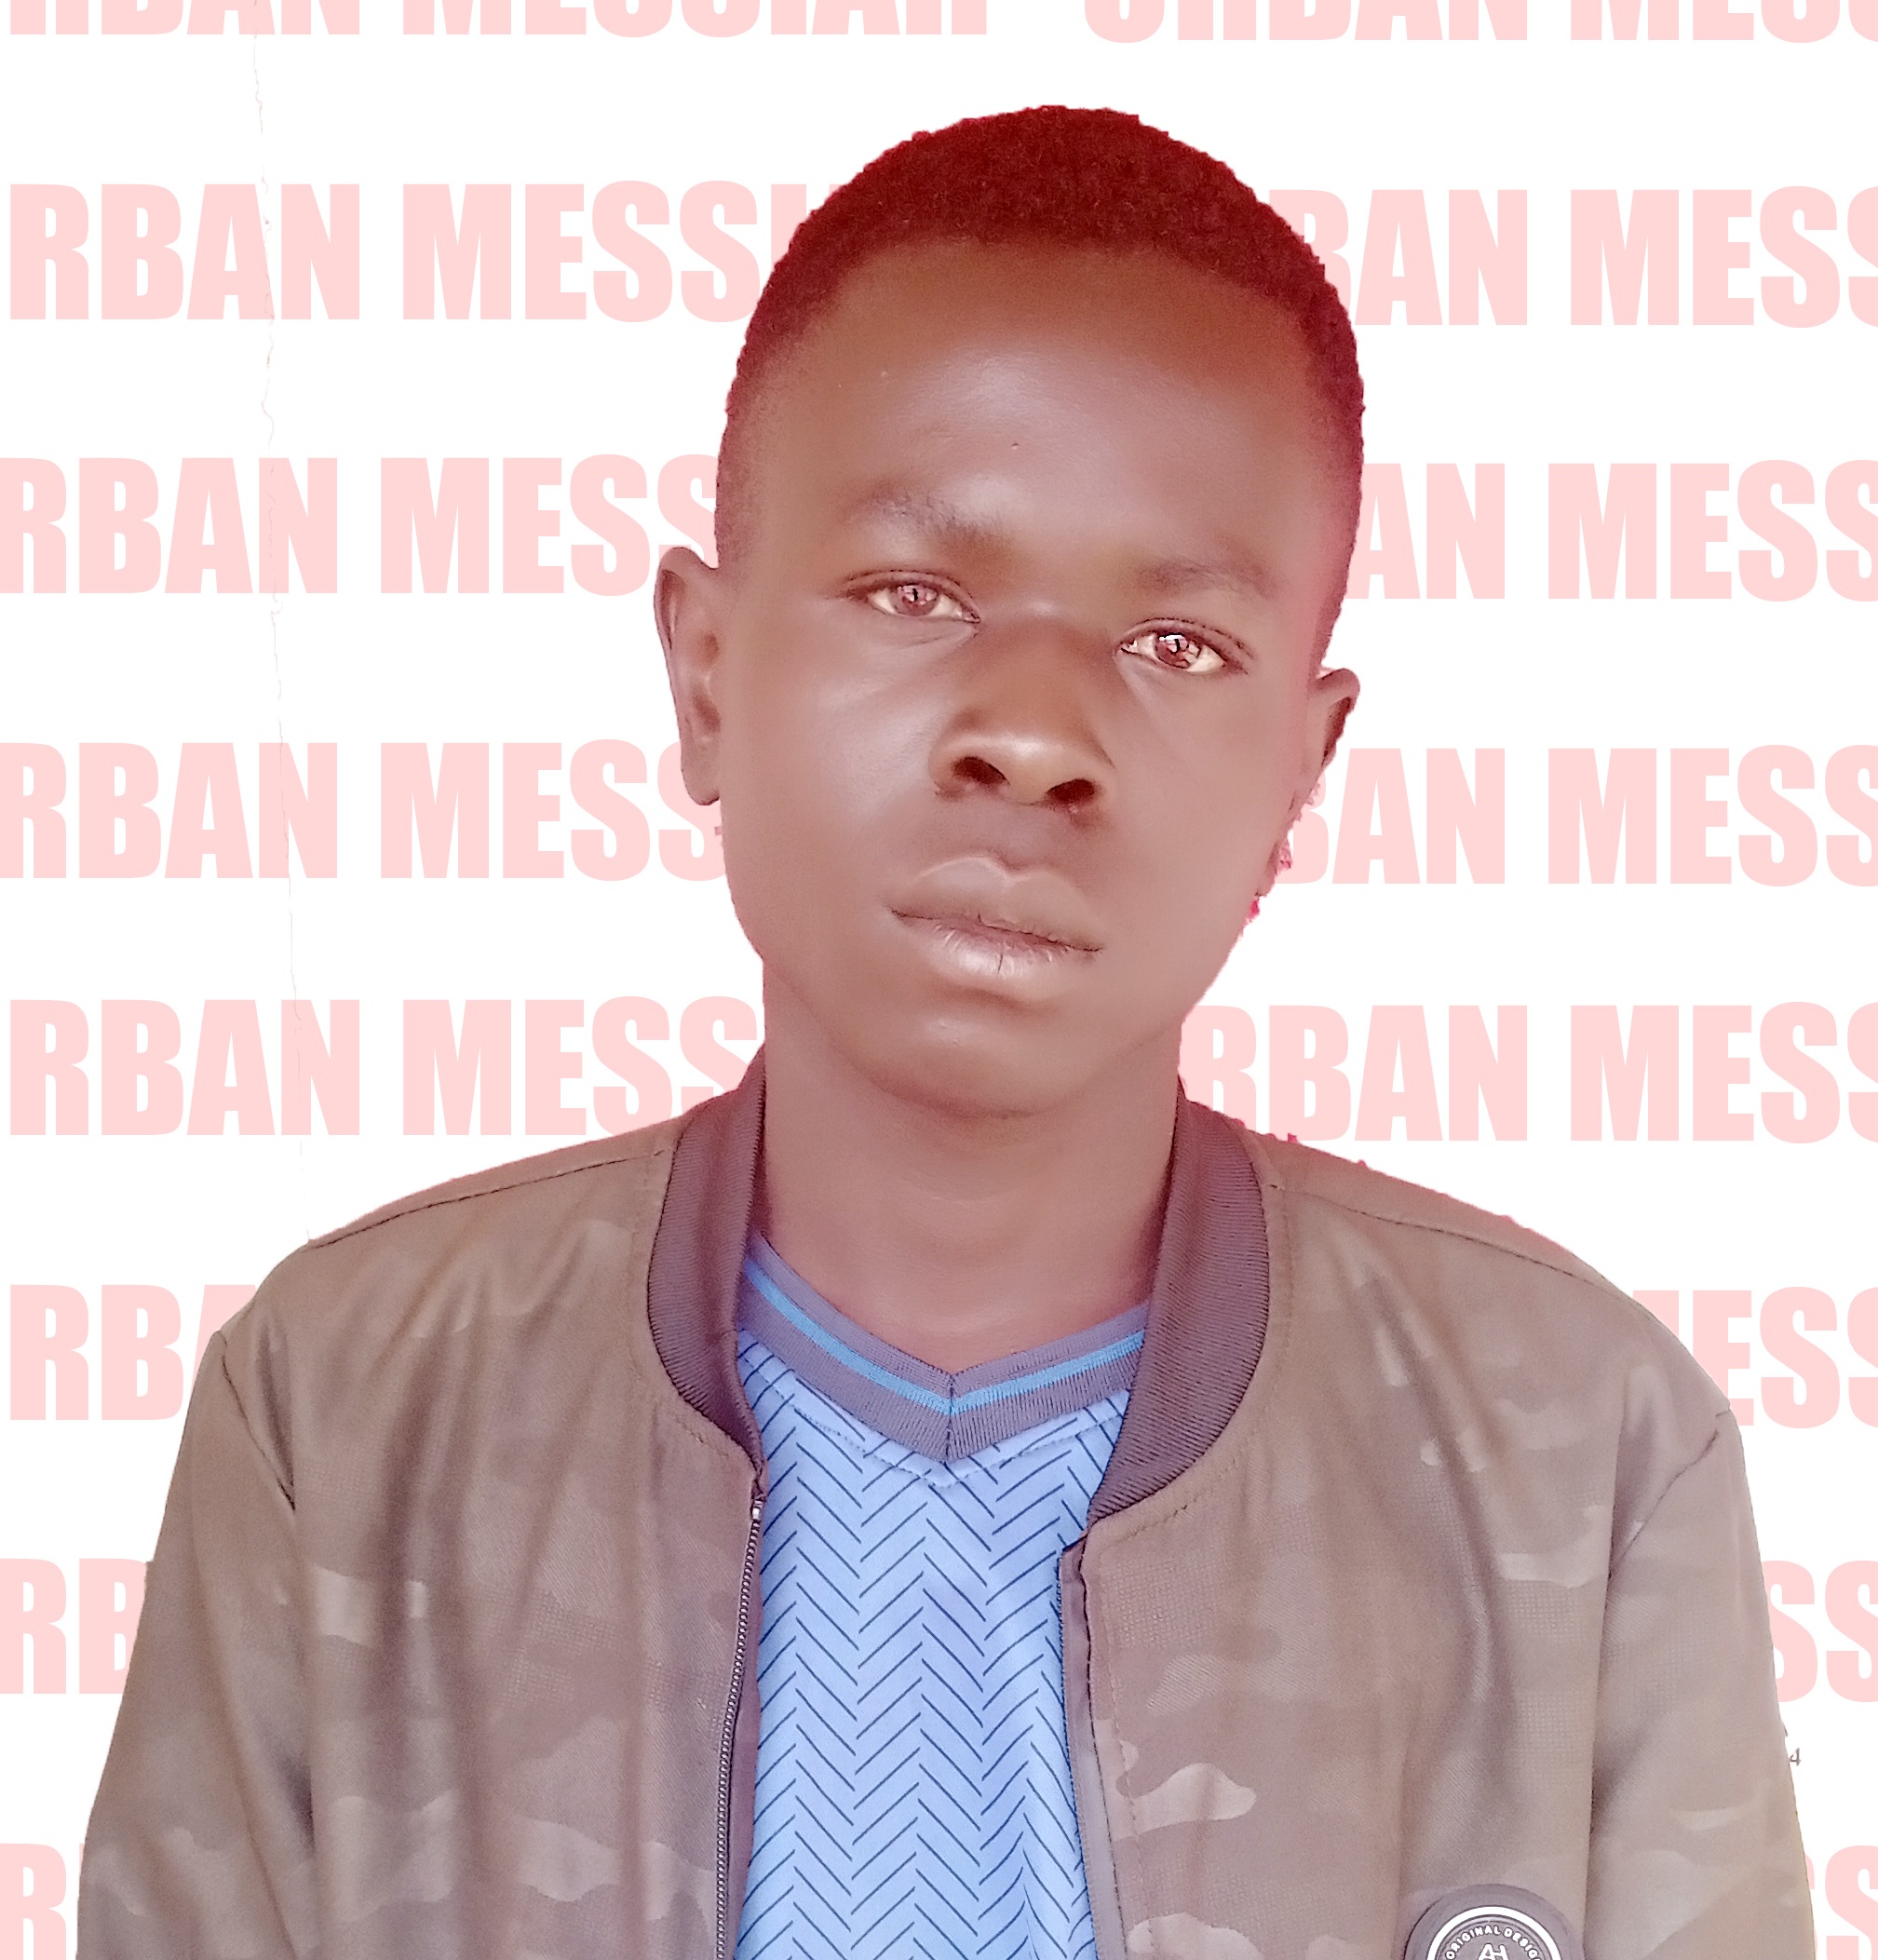 Urban Messiah